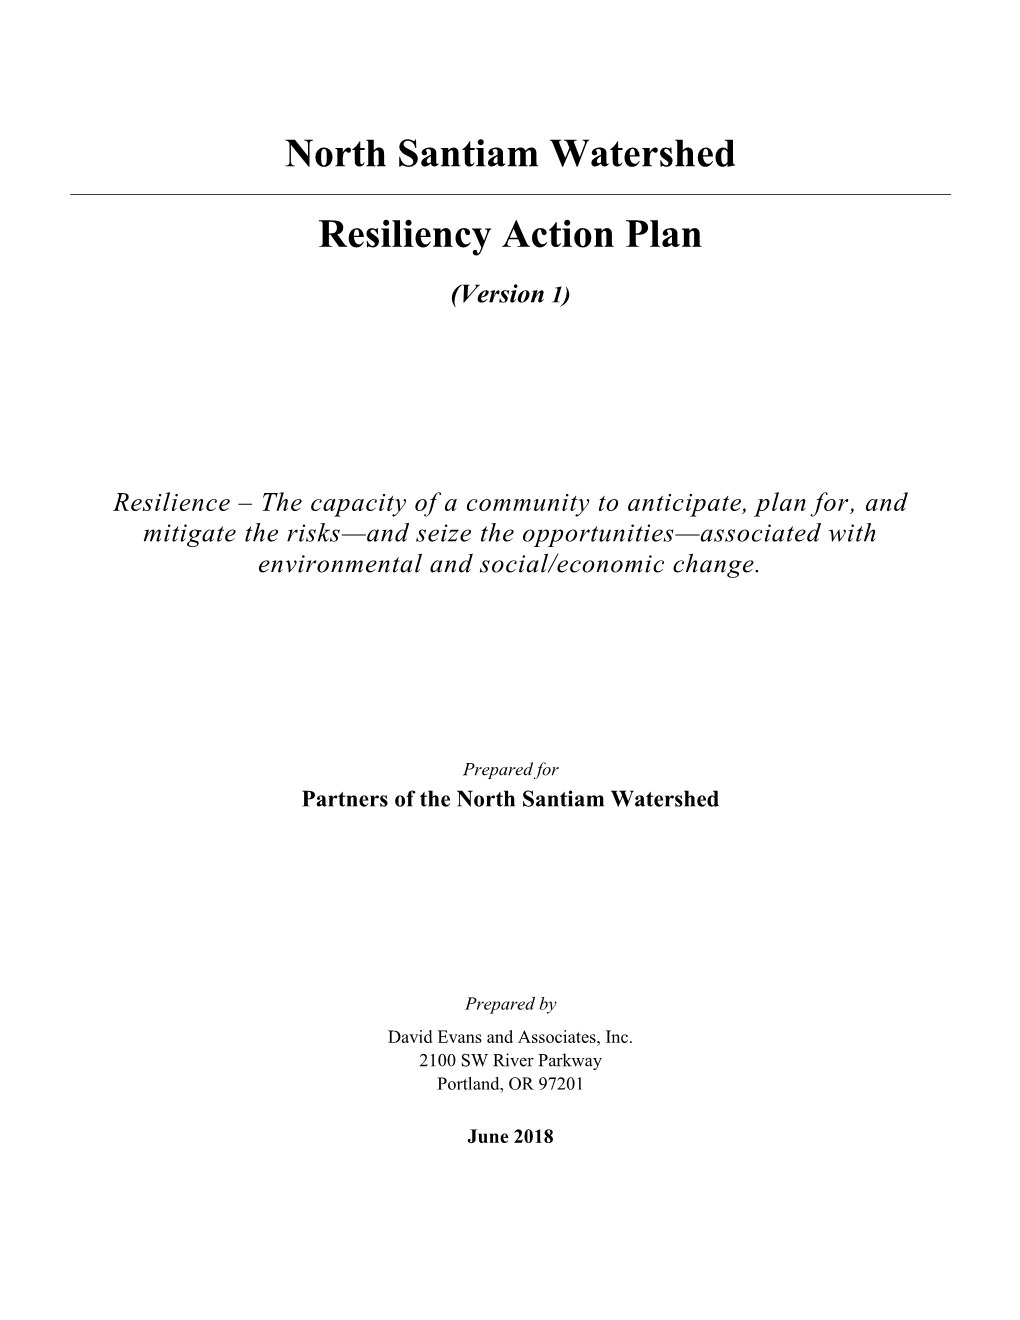 North Santiam Watershed Resiliency Action Plan